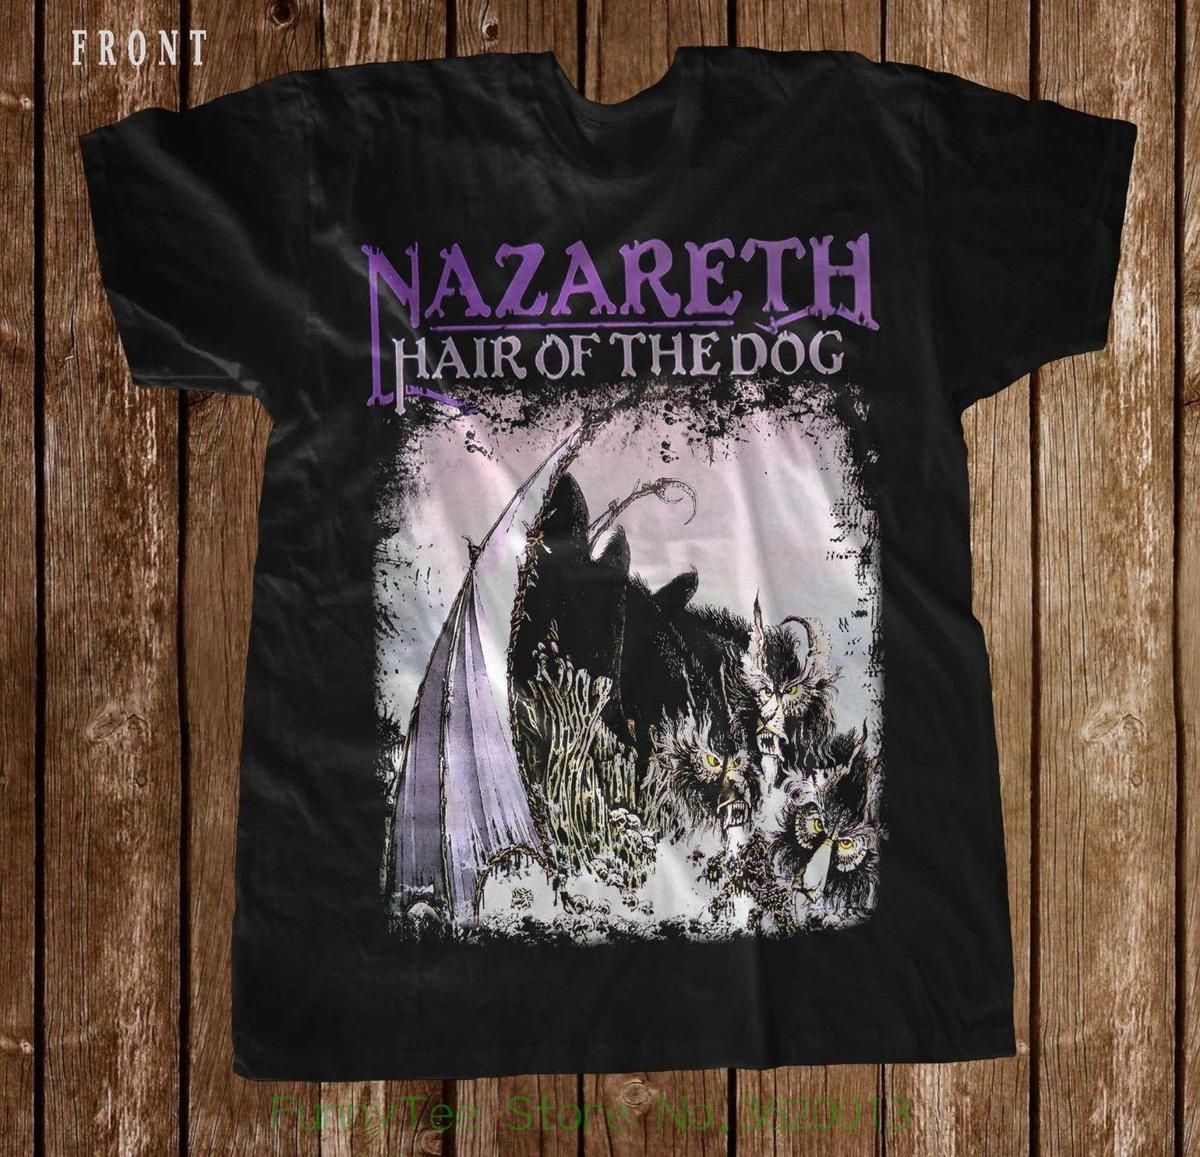 Nazareth Hair Of The Dog Heavy Metal Deep Purple Black T Shirt Sizes S To 7xl Fun T Shirts Online Shirts From Lijian57 12 08 Dhgate Com